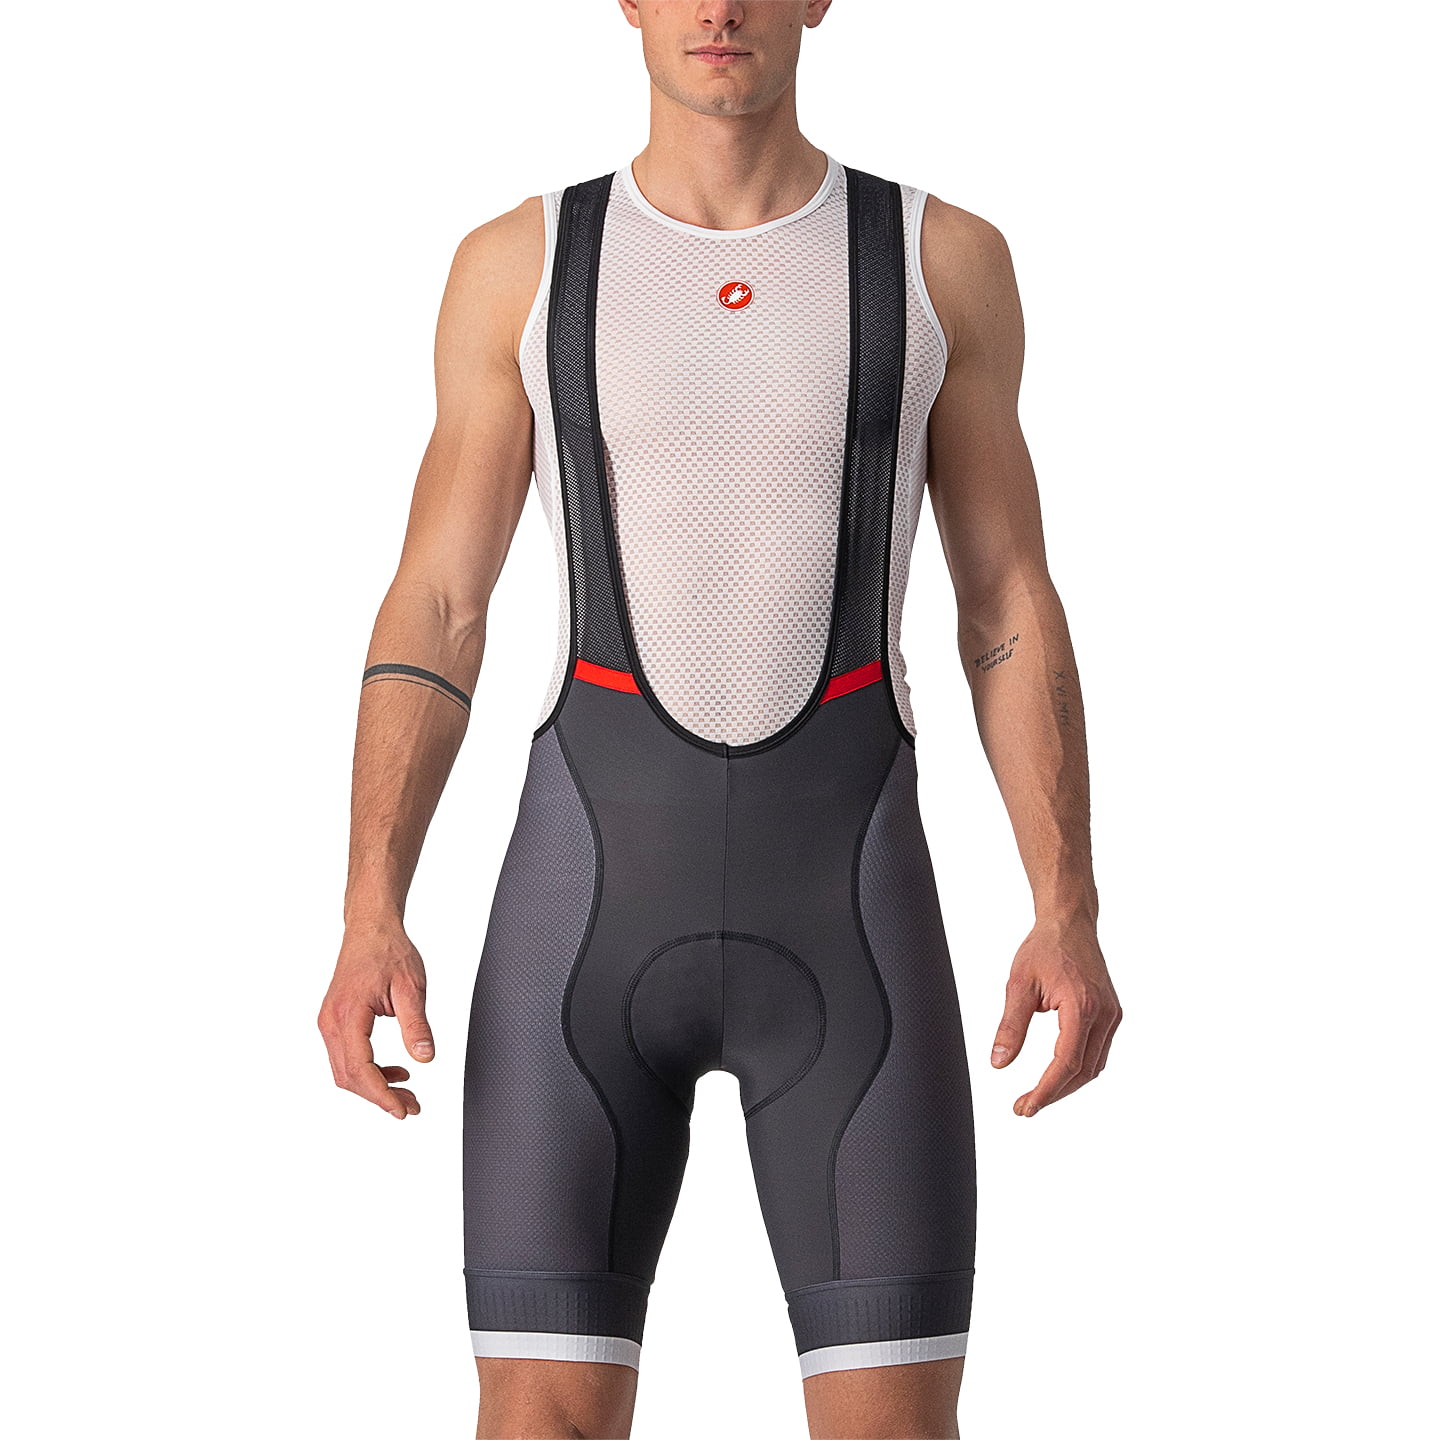 CASTELLI Competizione Kit Bib Shorts Bib Shorts, for men, size M, Cycle shorts, Cycling clothing